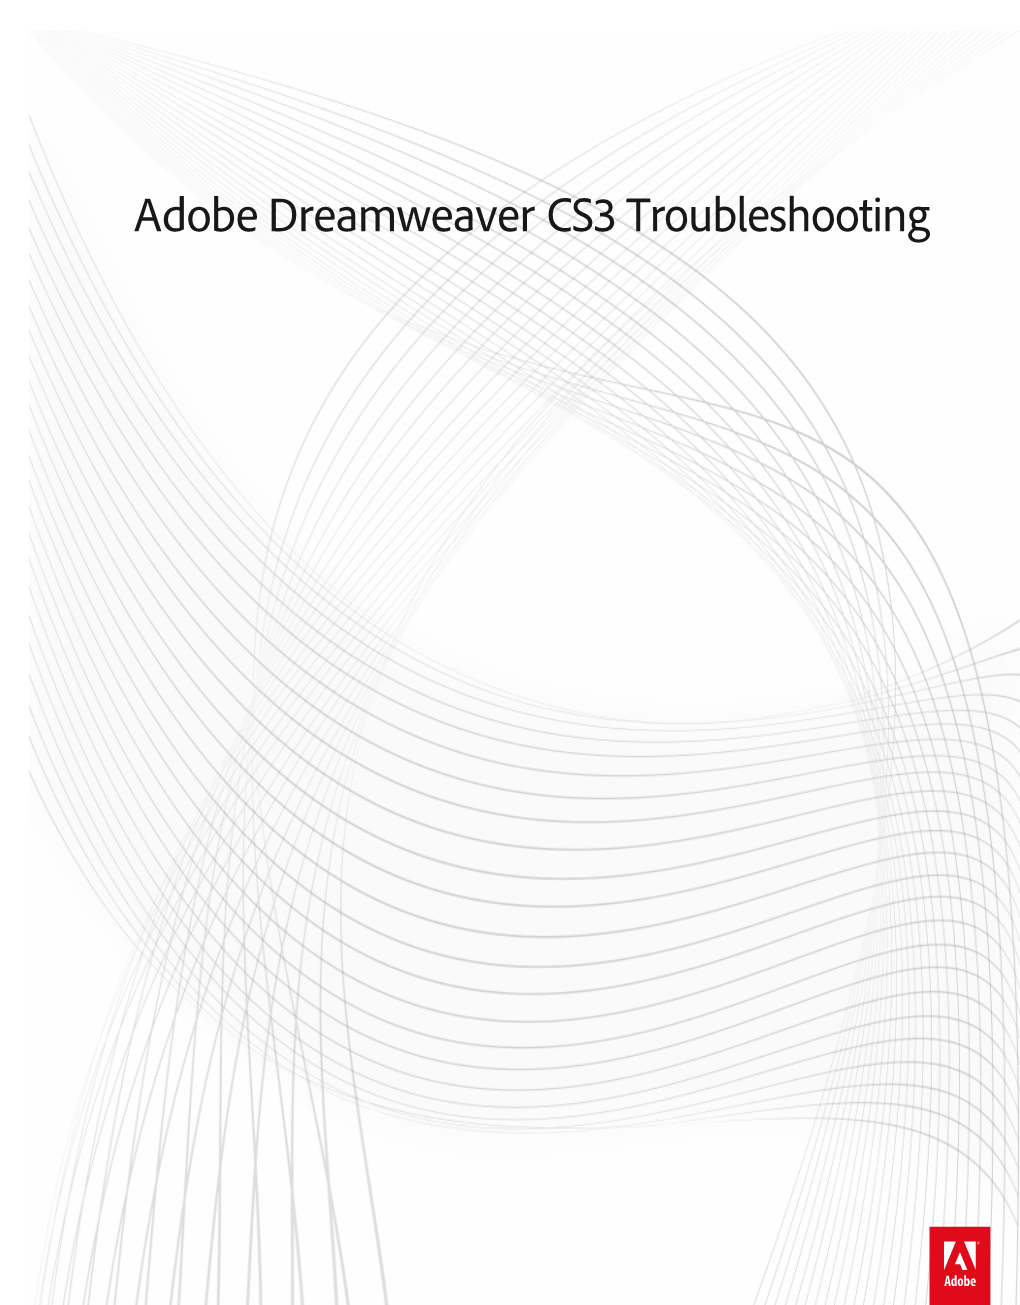 Adobe Dreamweaver CS3 Troubleshooting Legal Notices